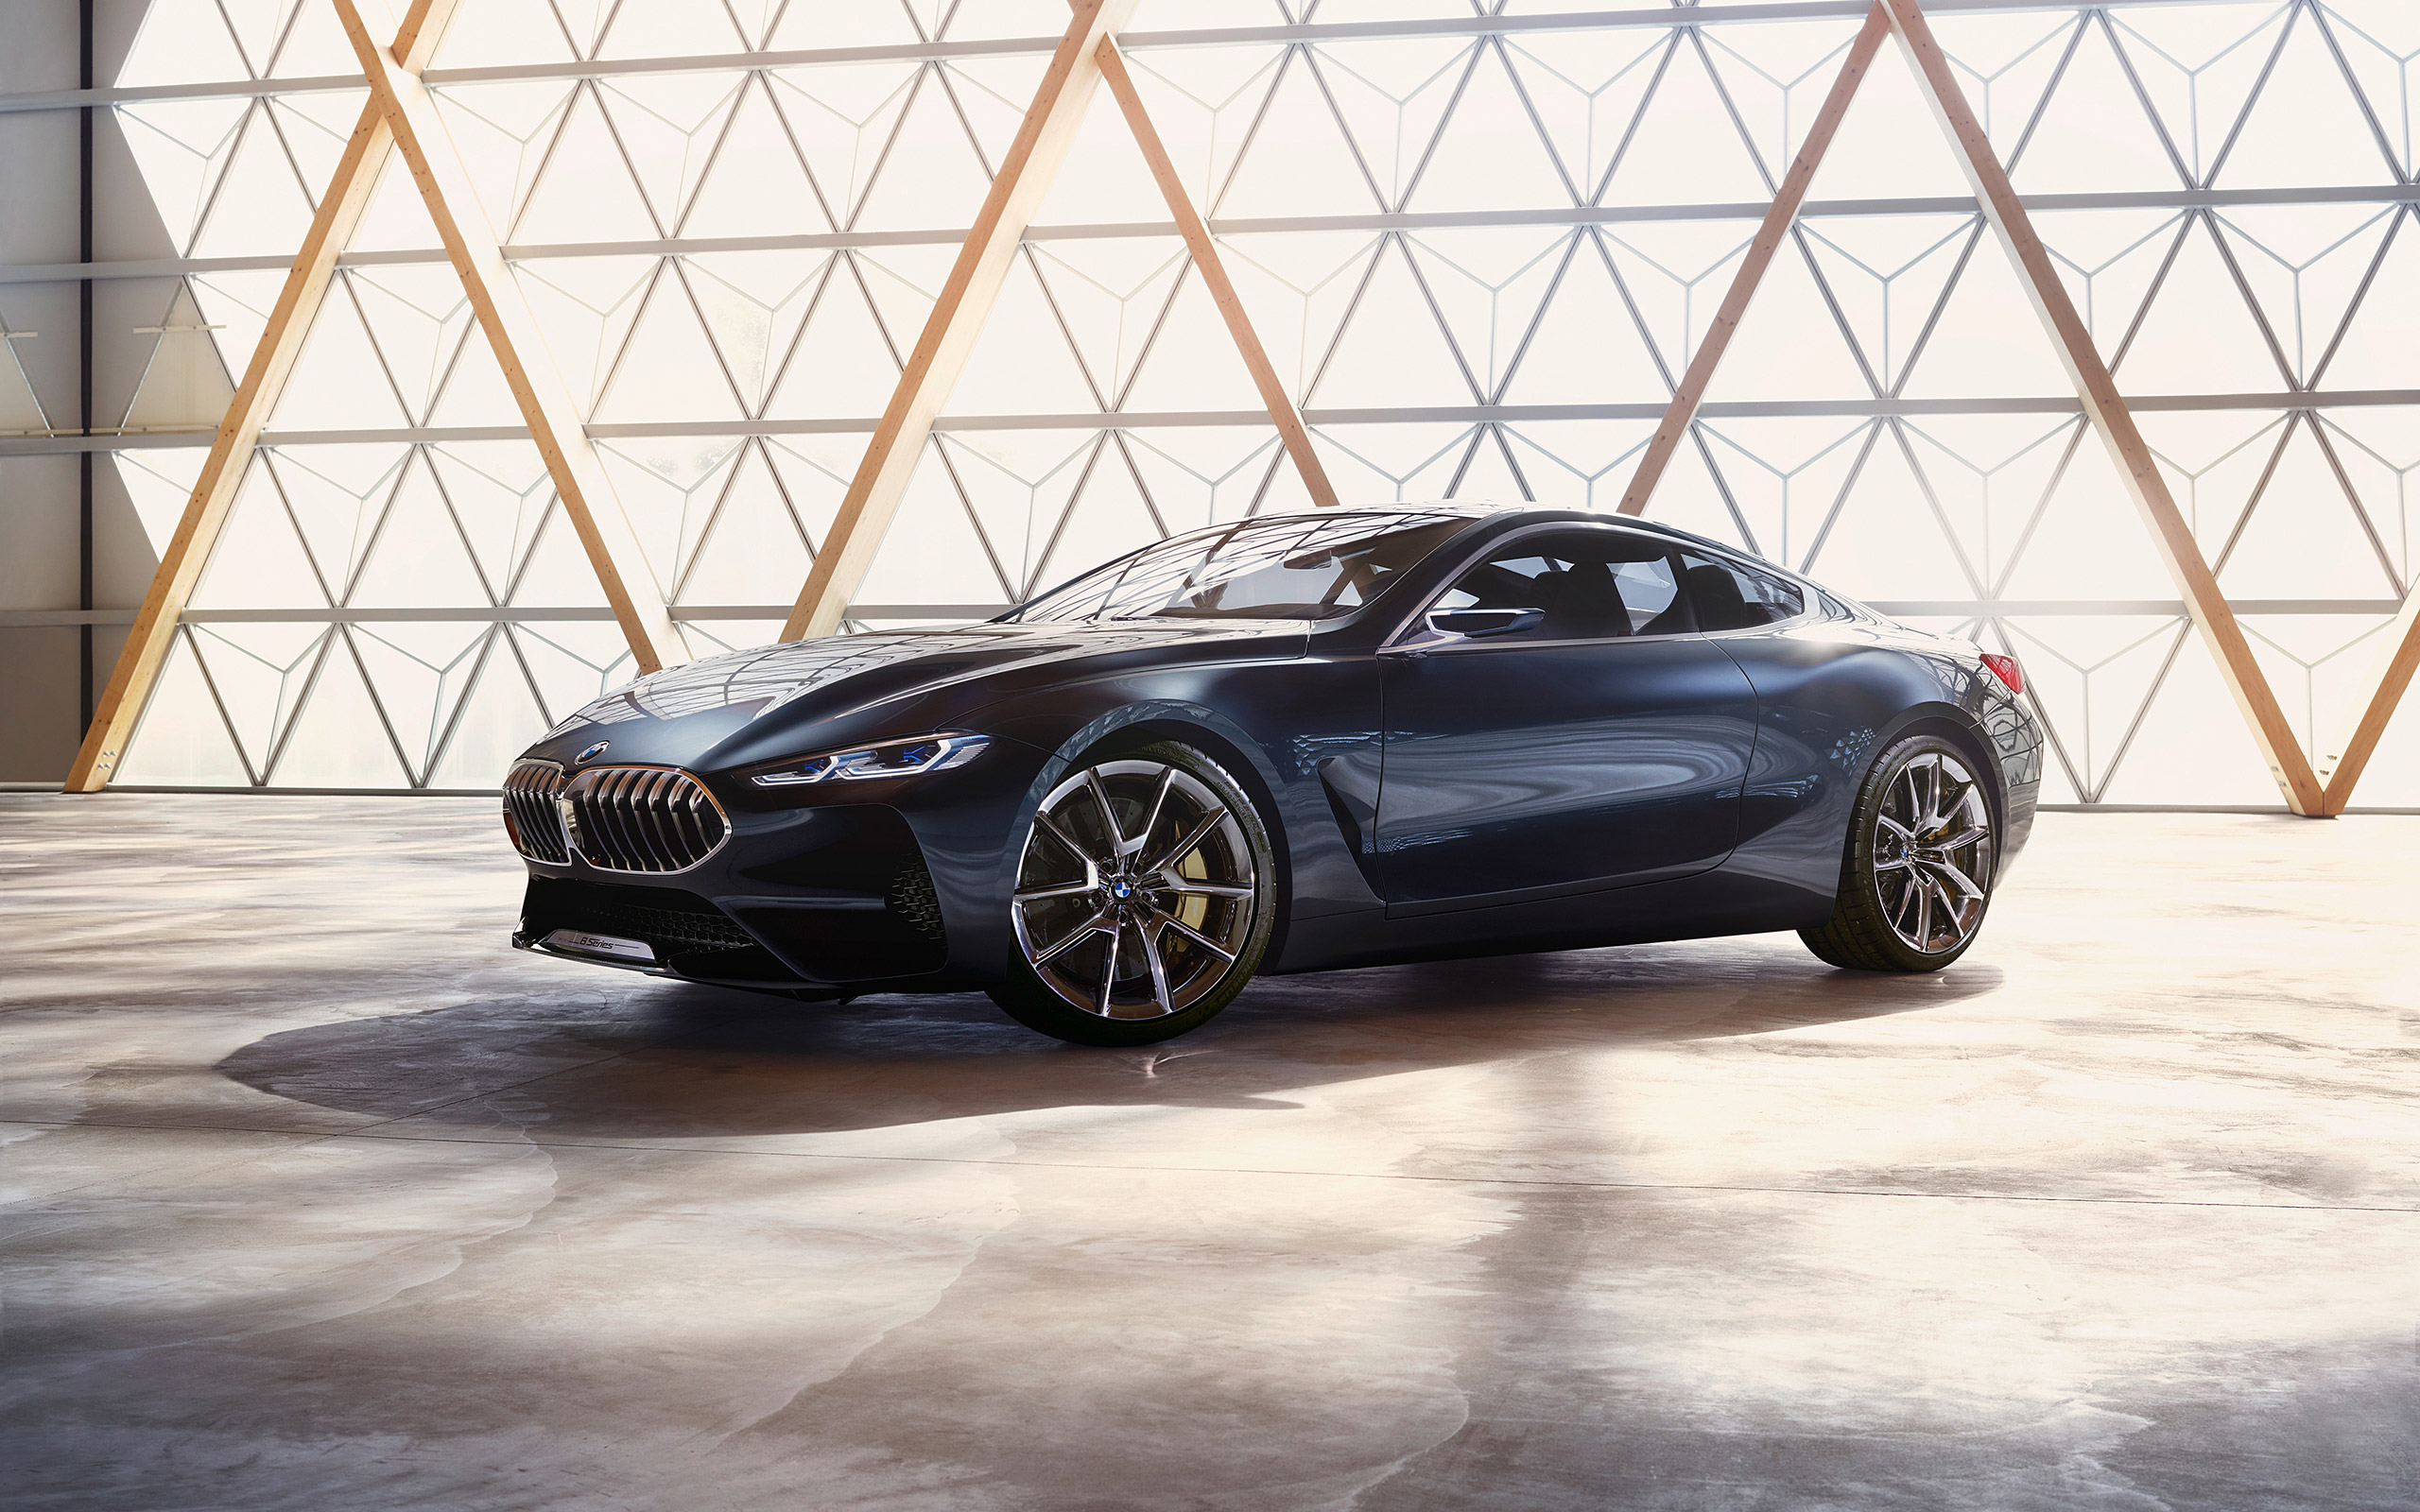  2017 BMW 8-Series Concept Wallpaper.